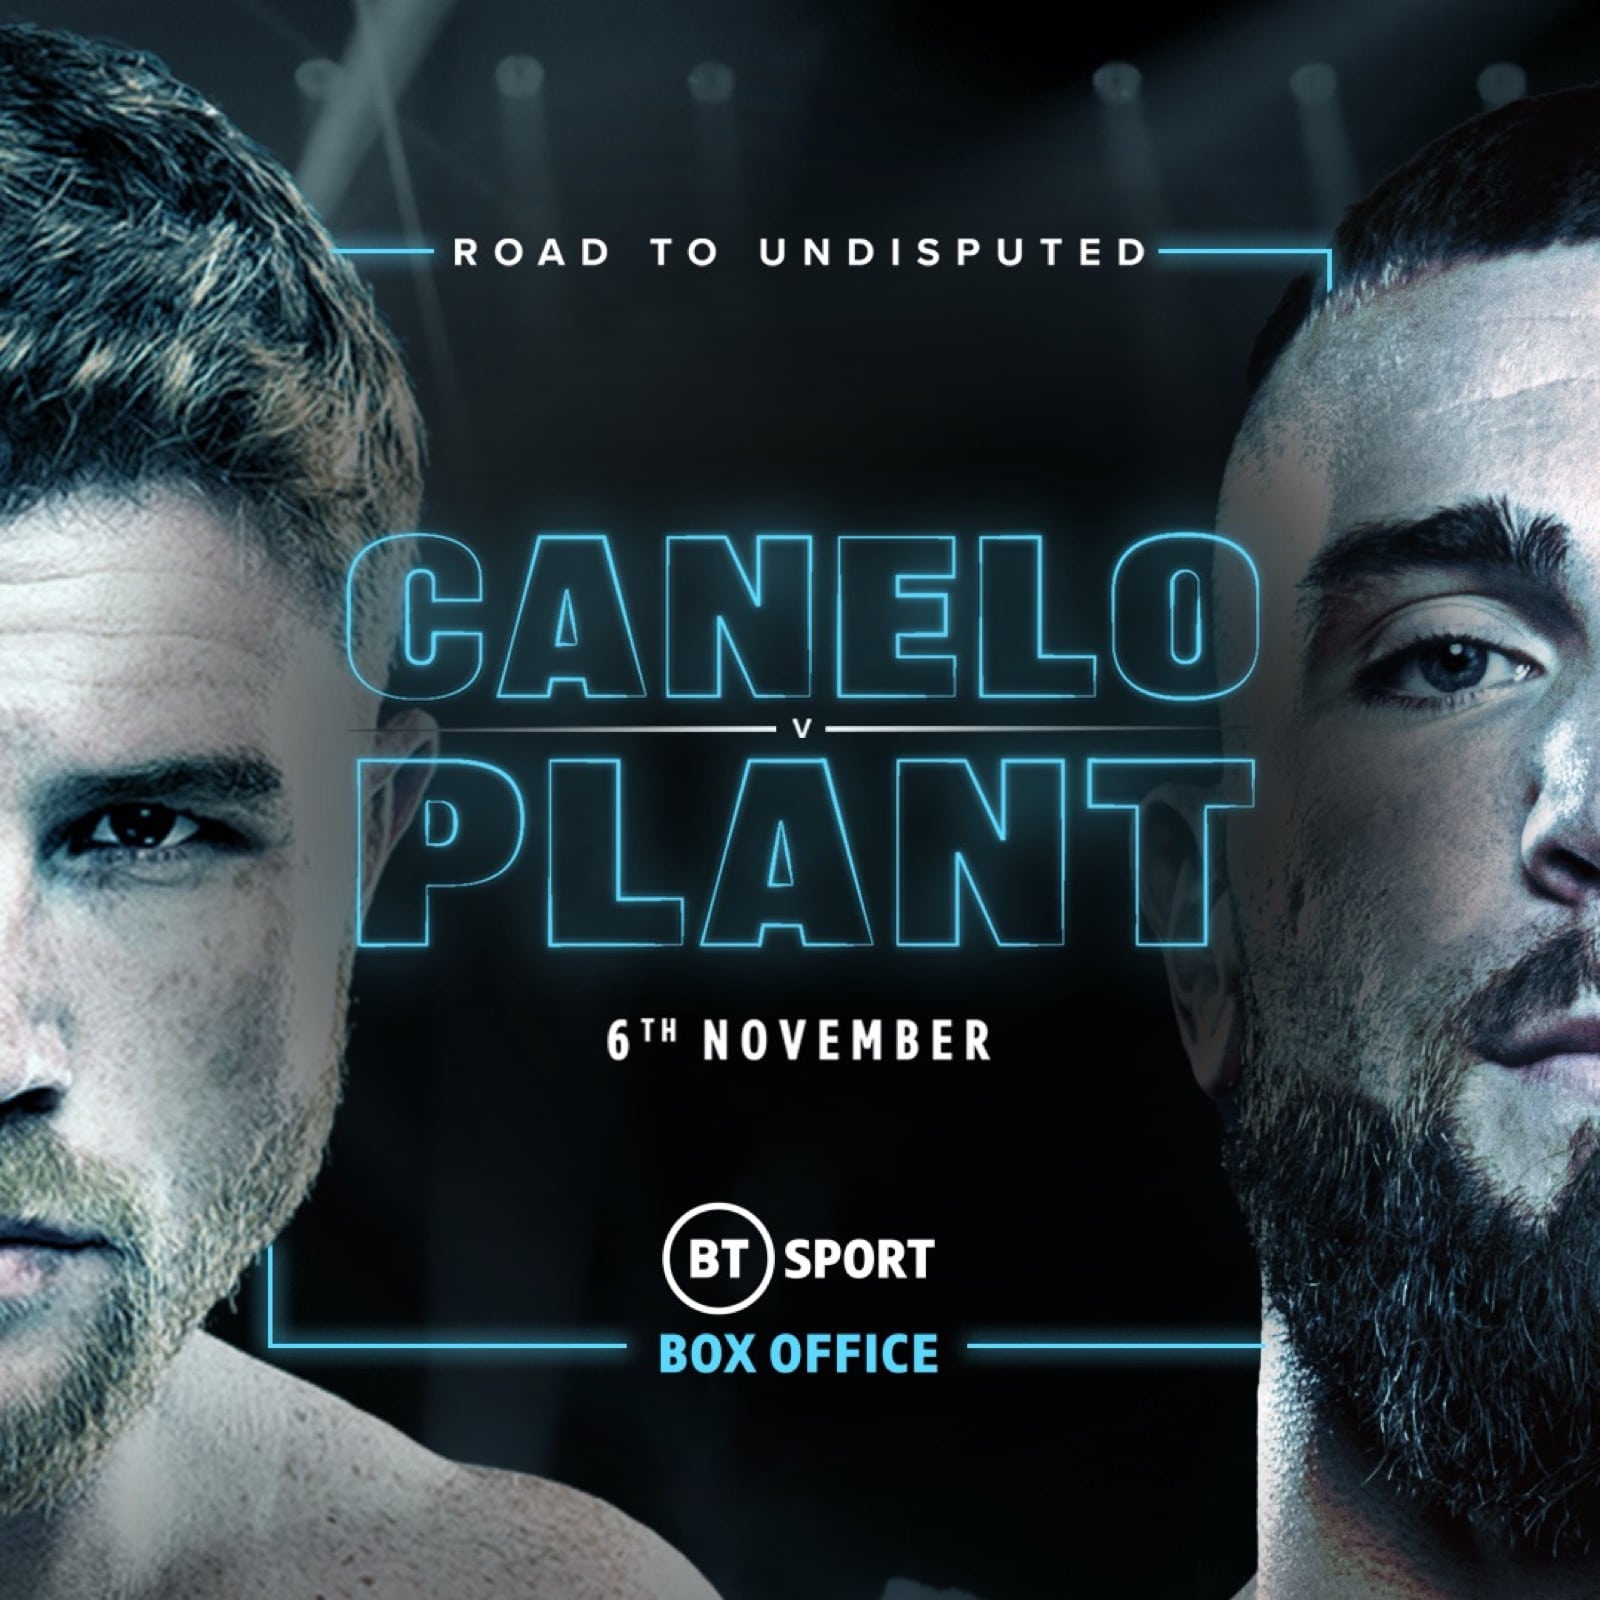 Canelo vs Plant LIVE on BT Sport Box Office in UK!